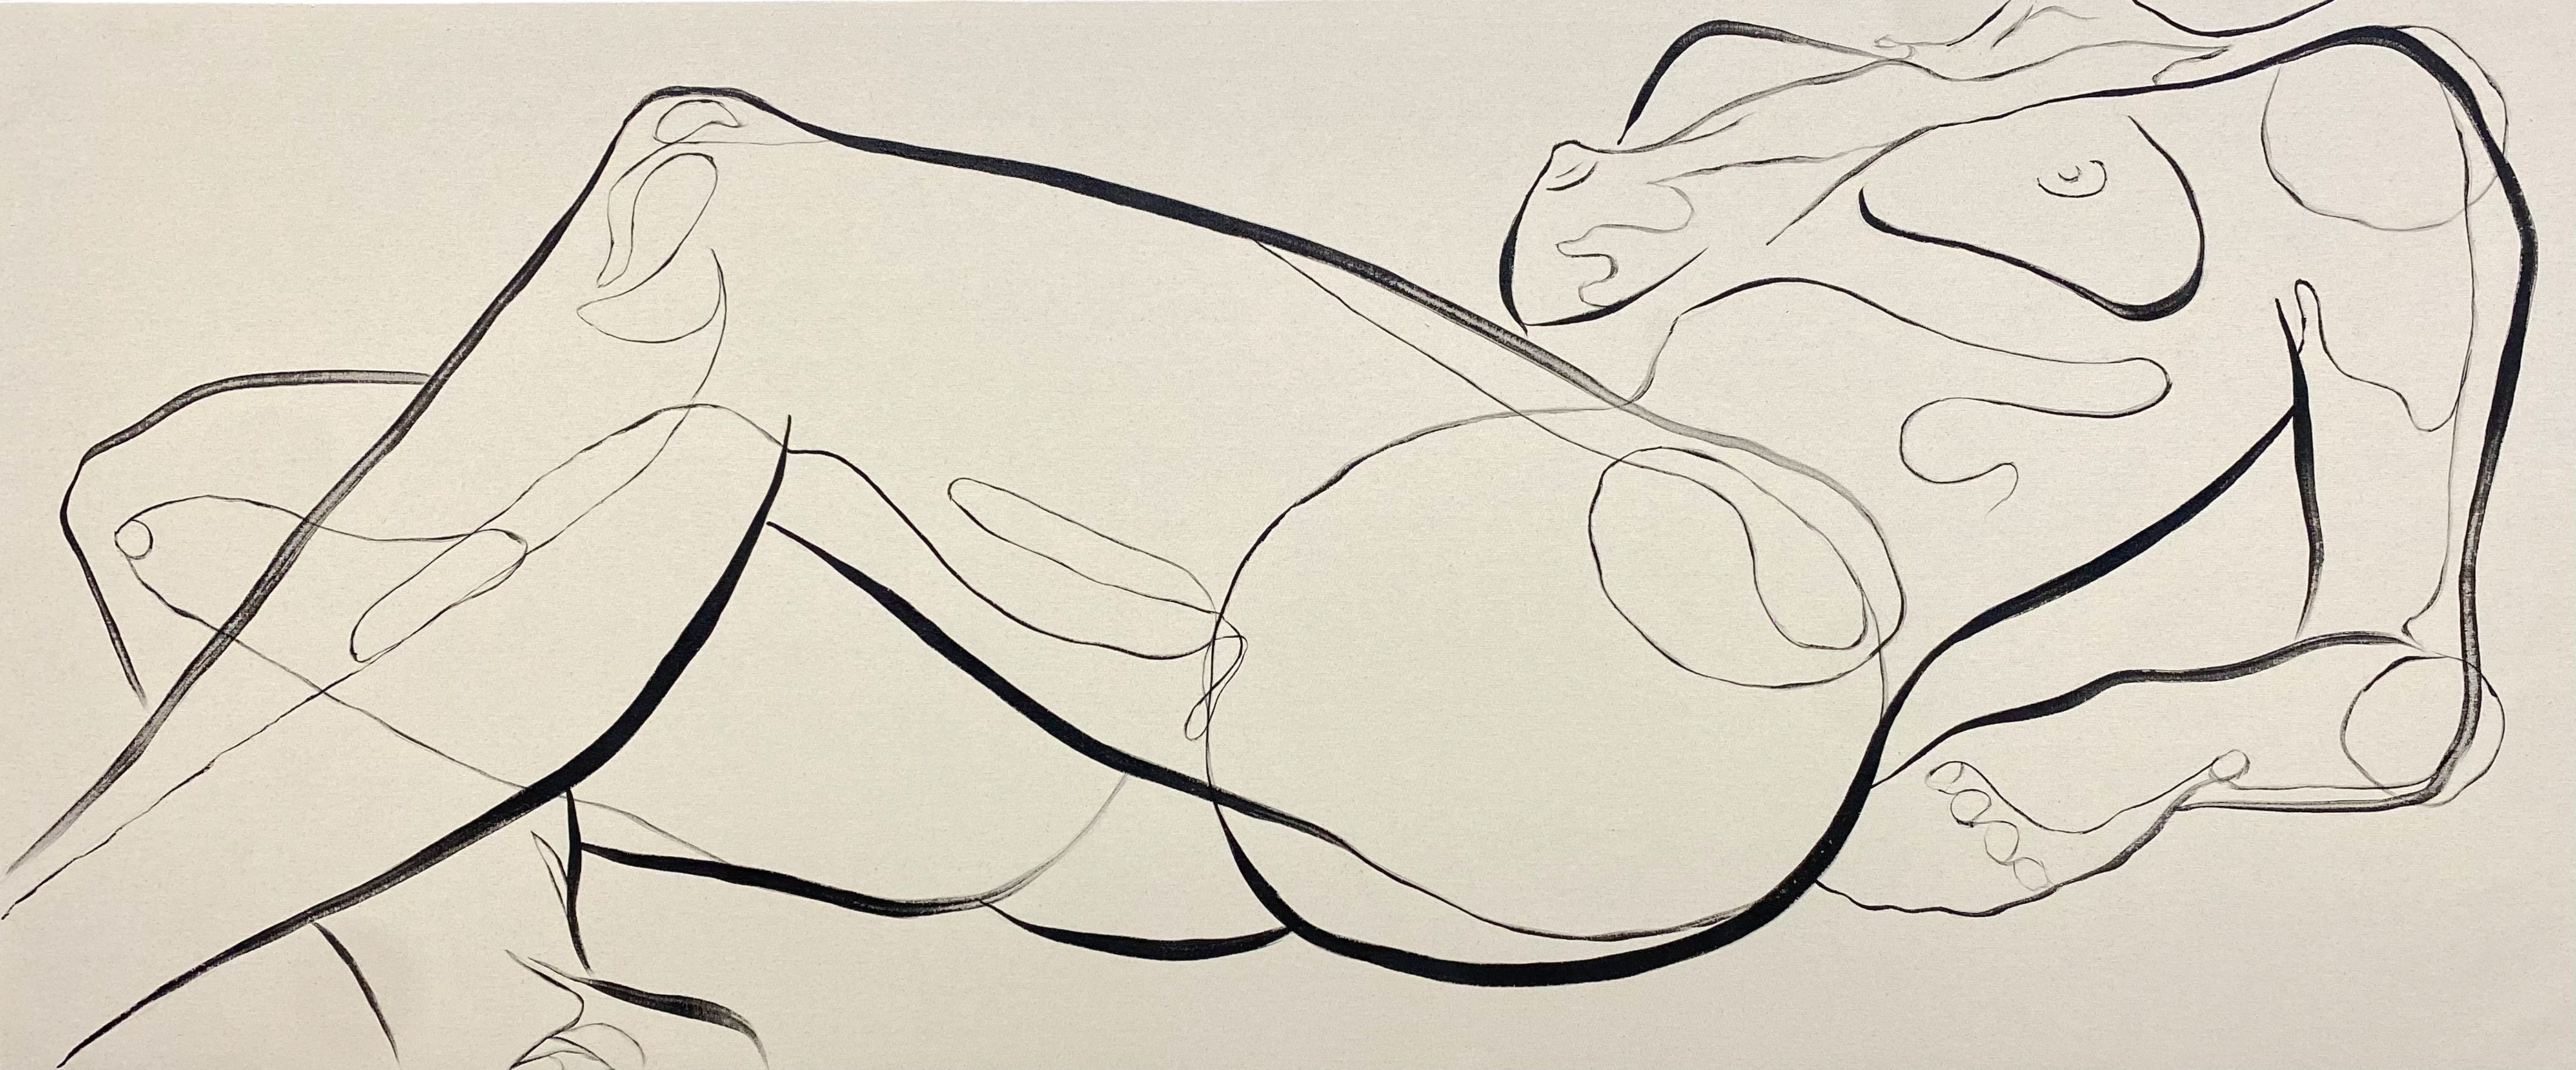 fine art portrait of a nude woman in a reclined position